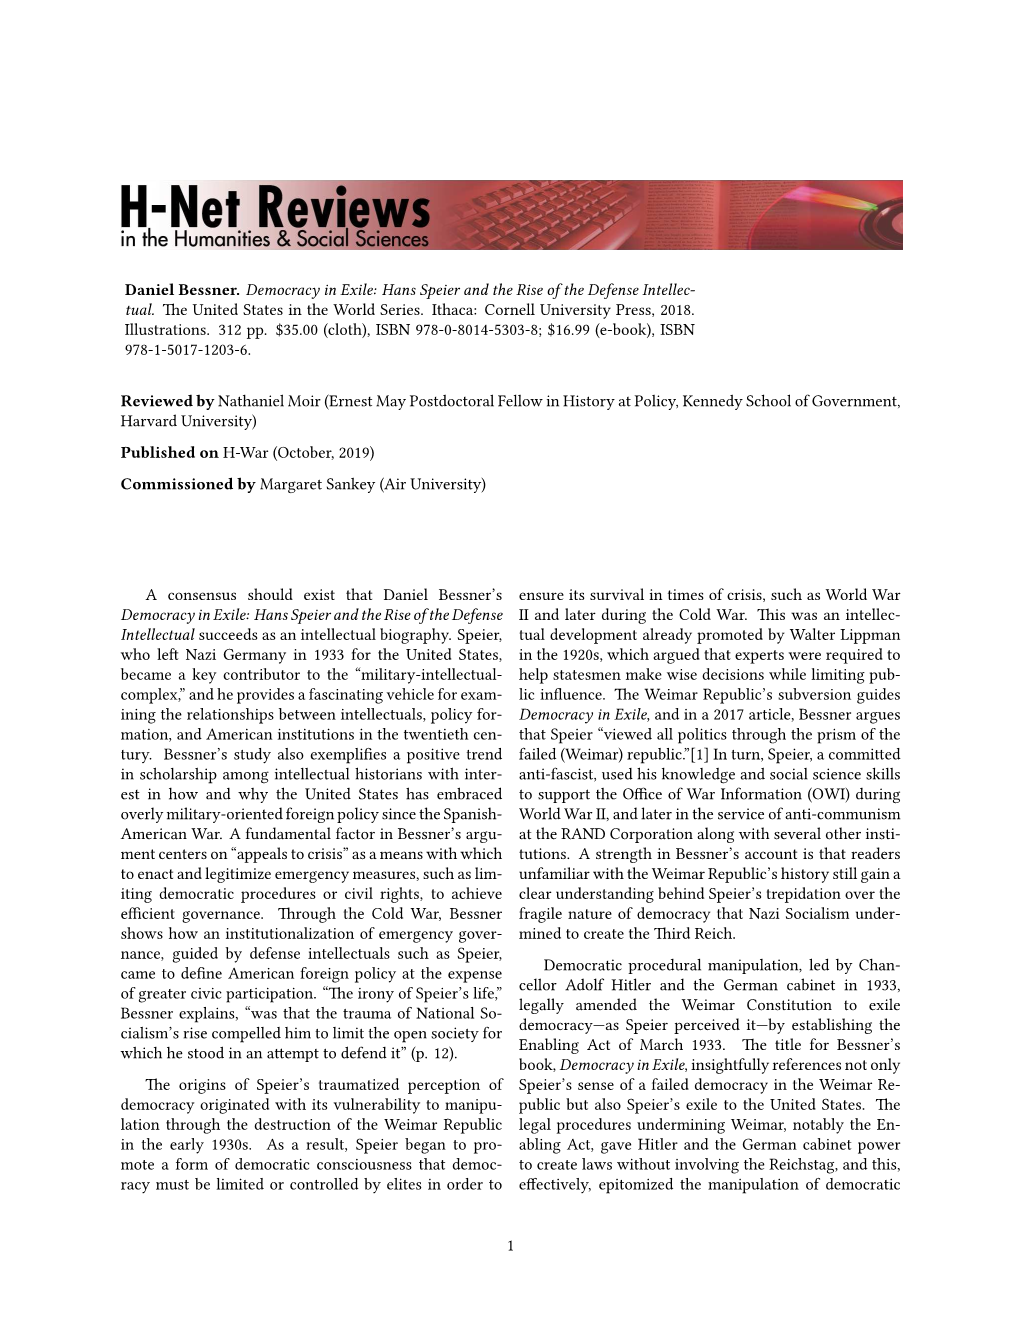 H-Net Reviews, October 2019